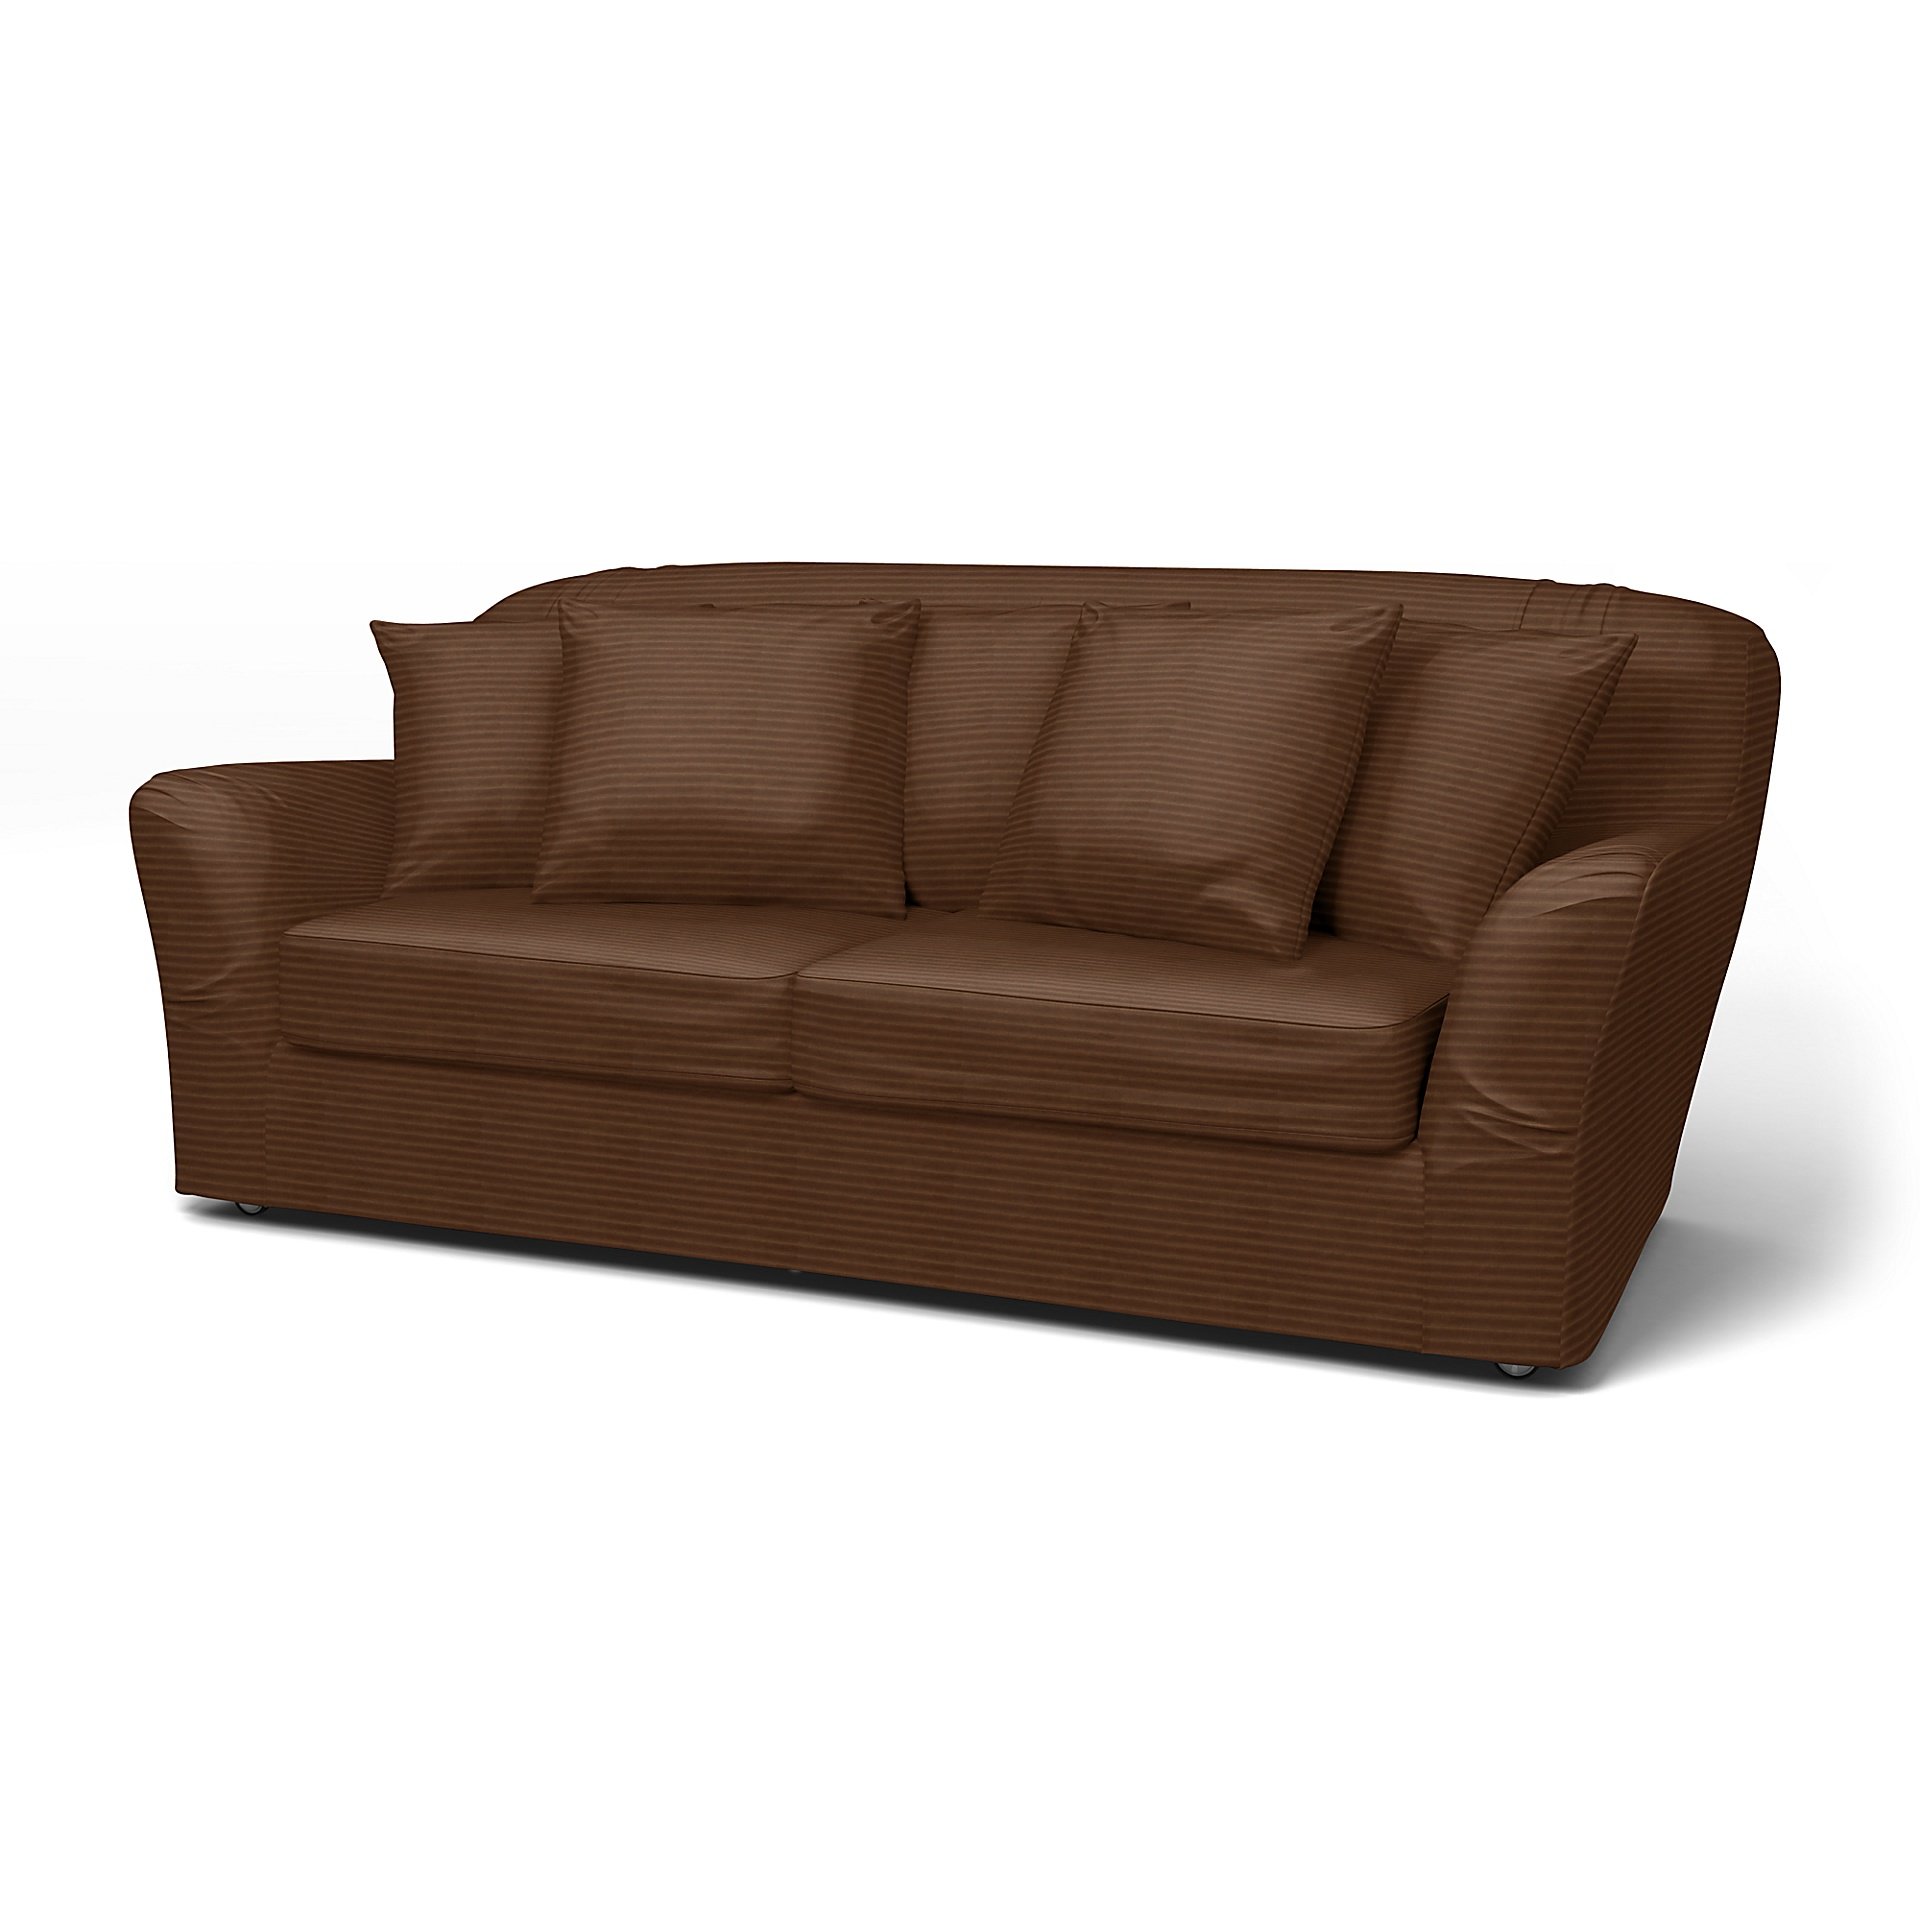 IKEA - Tomelilla sofa bed (Standard model), Chocolate Brown, Corduroy - Bemz